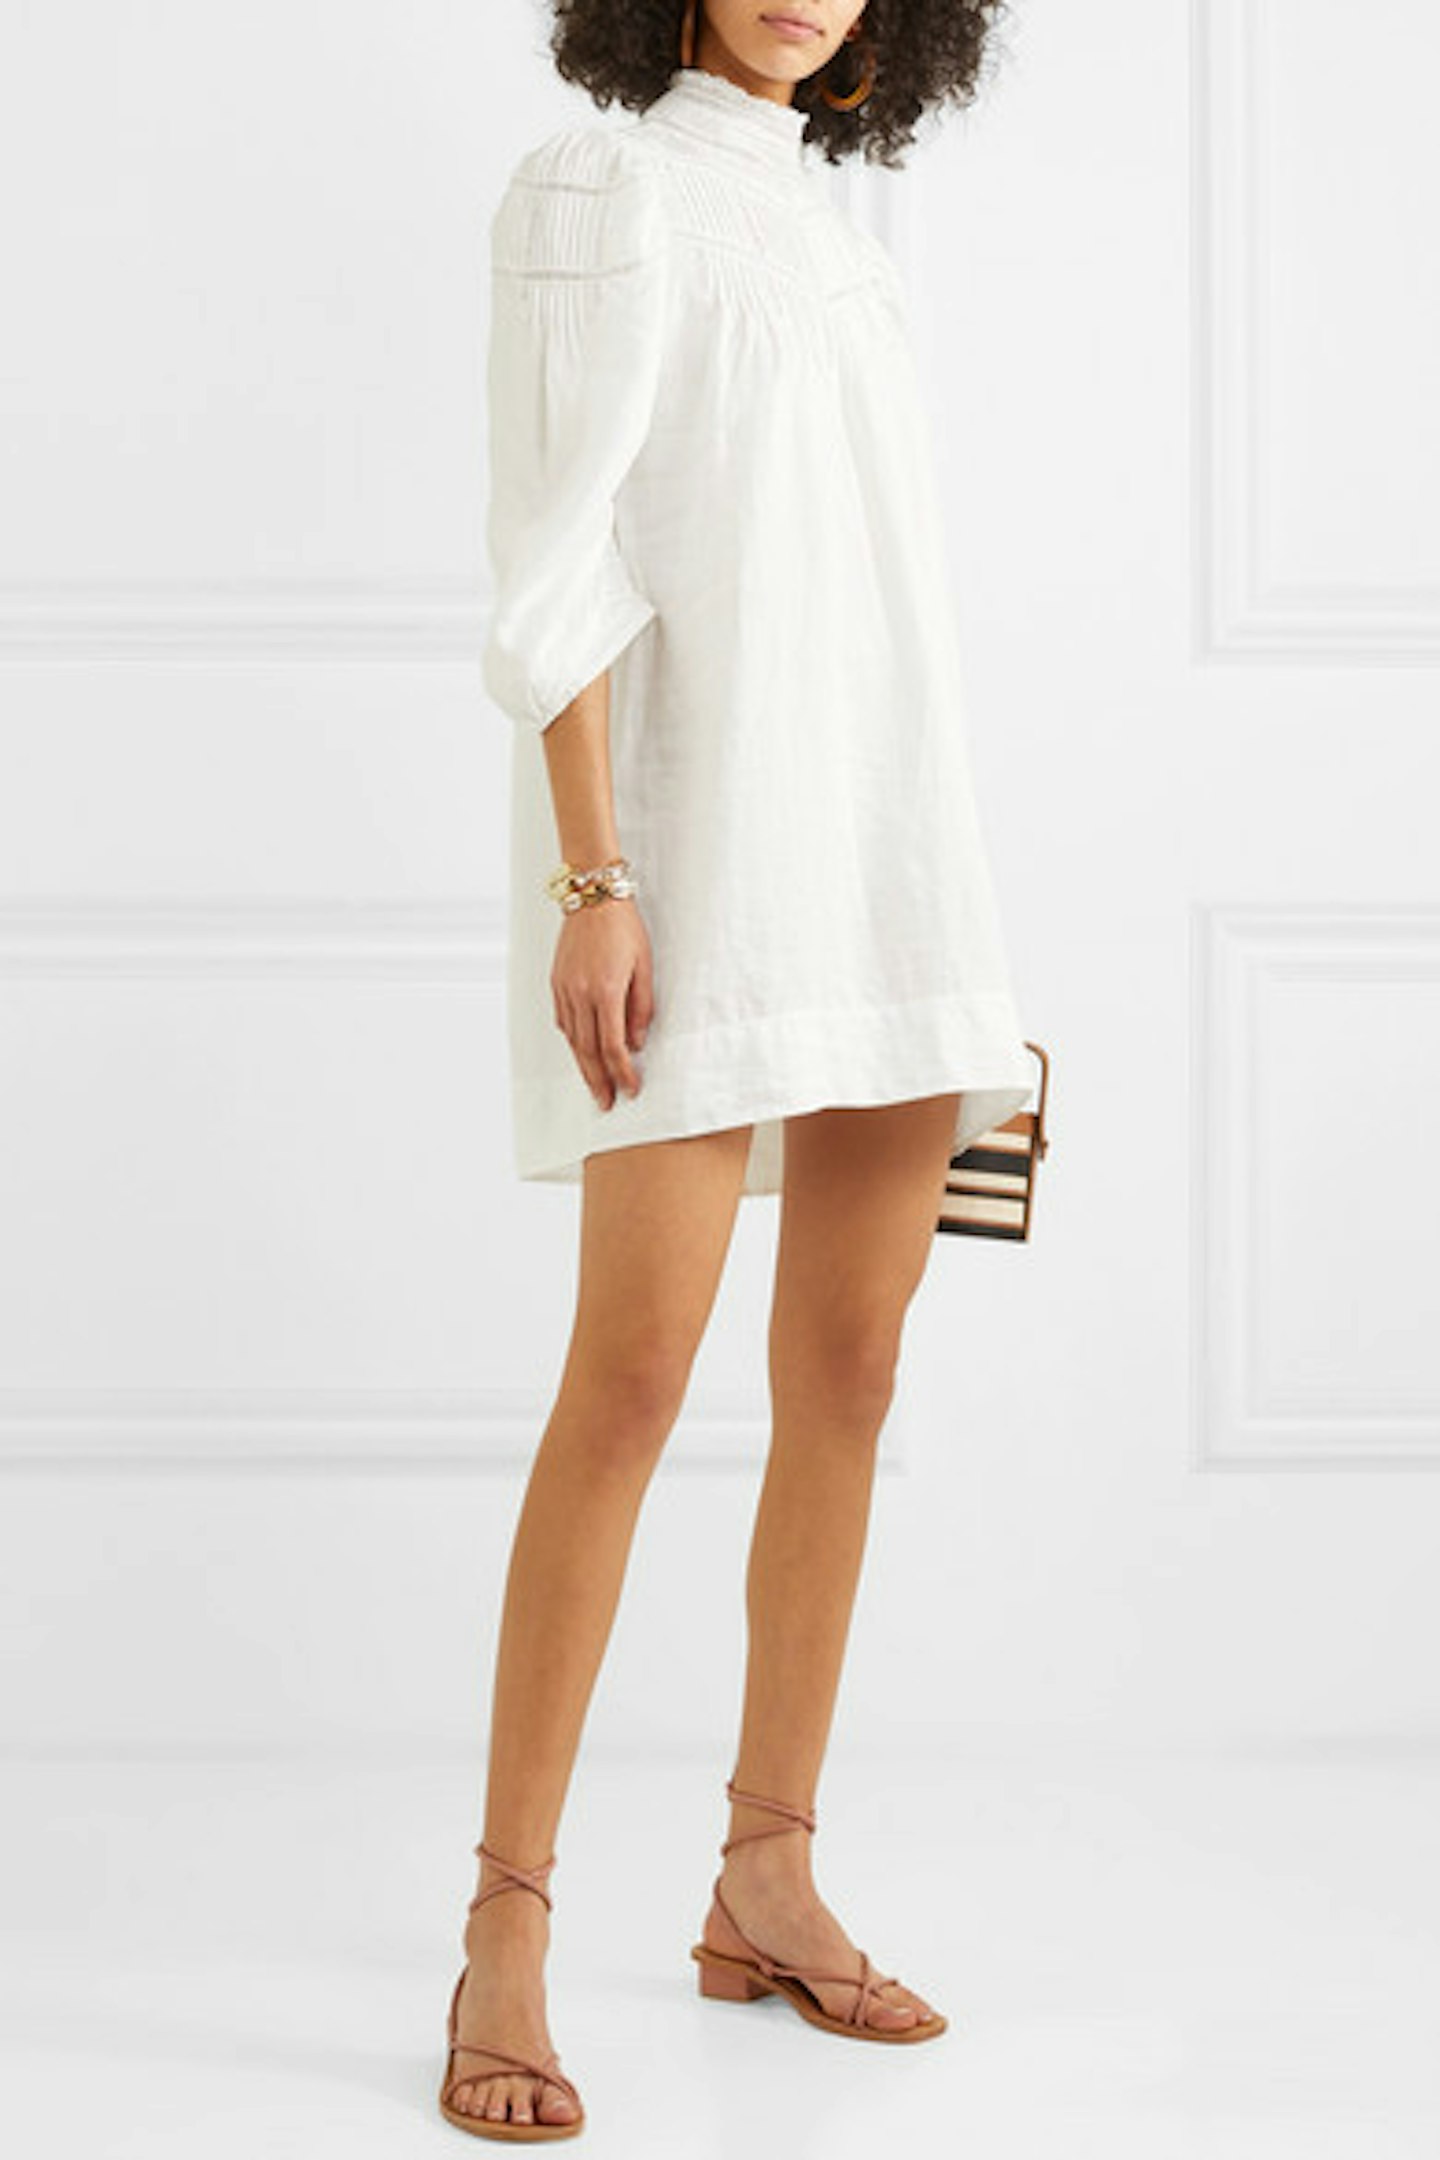 Georgia Lace-Trimmed Mini Dress, £265